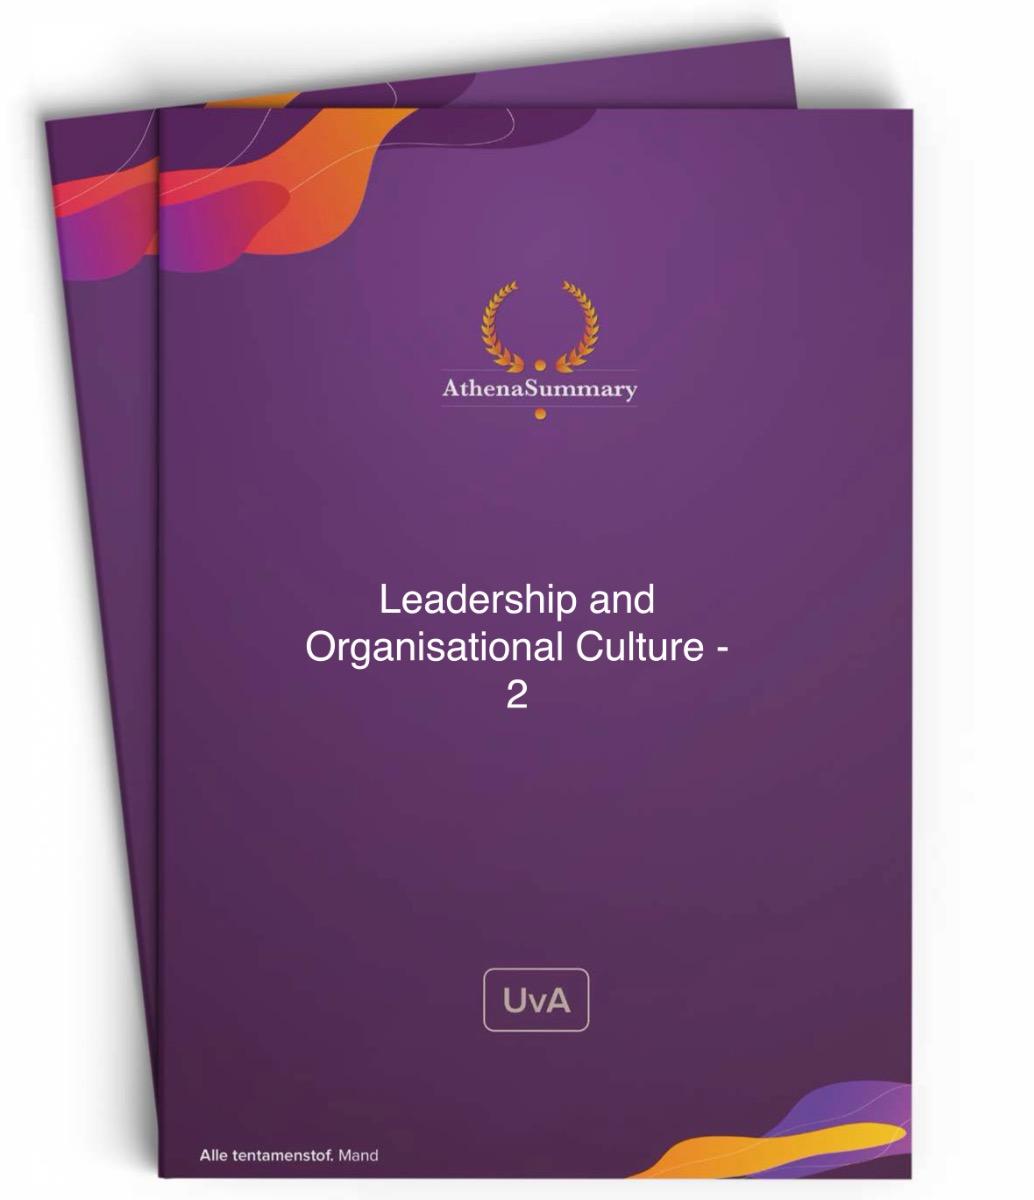 Literature Summary: Leadership and Organisational Culture - 2